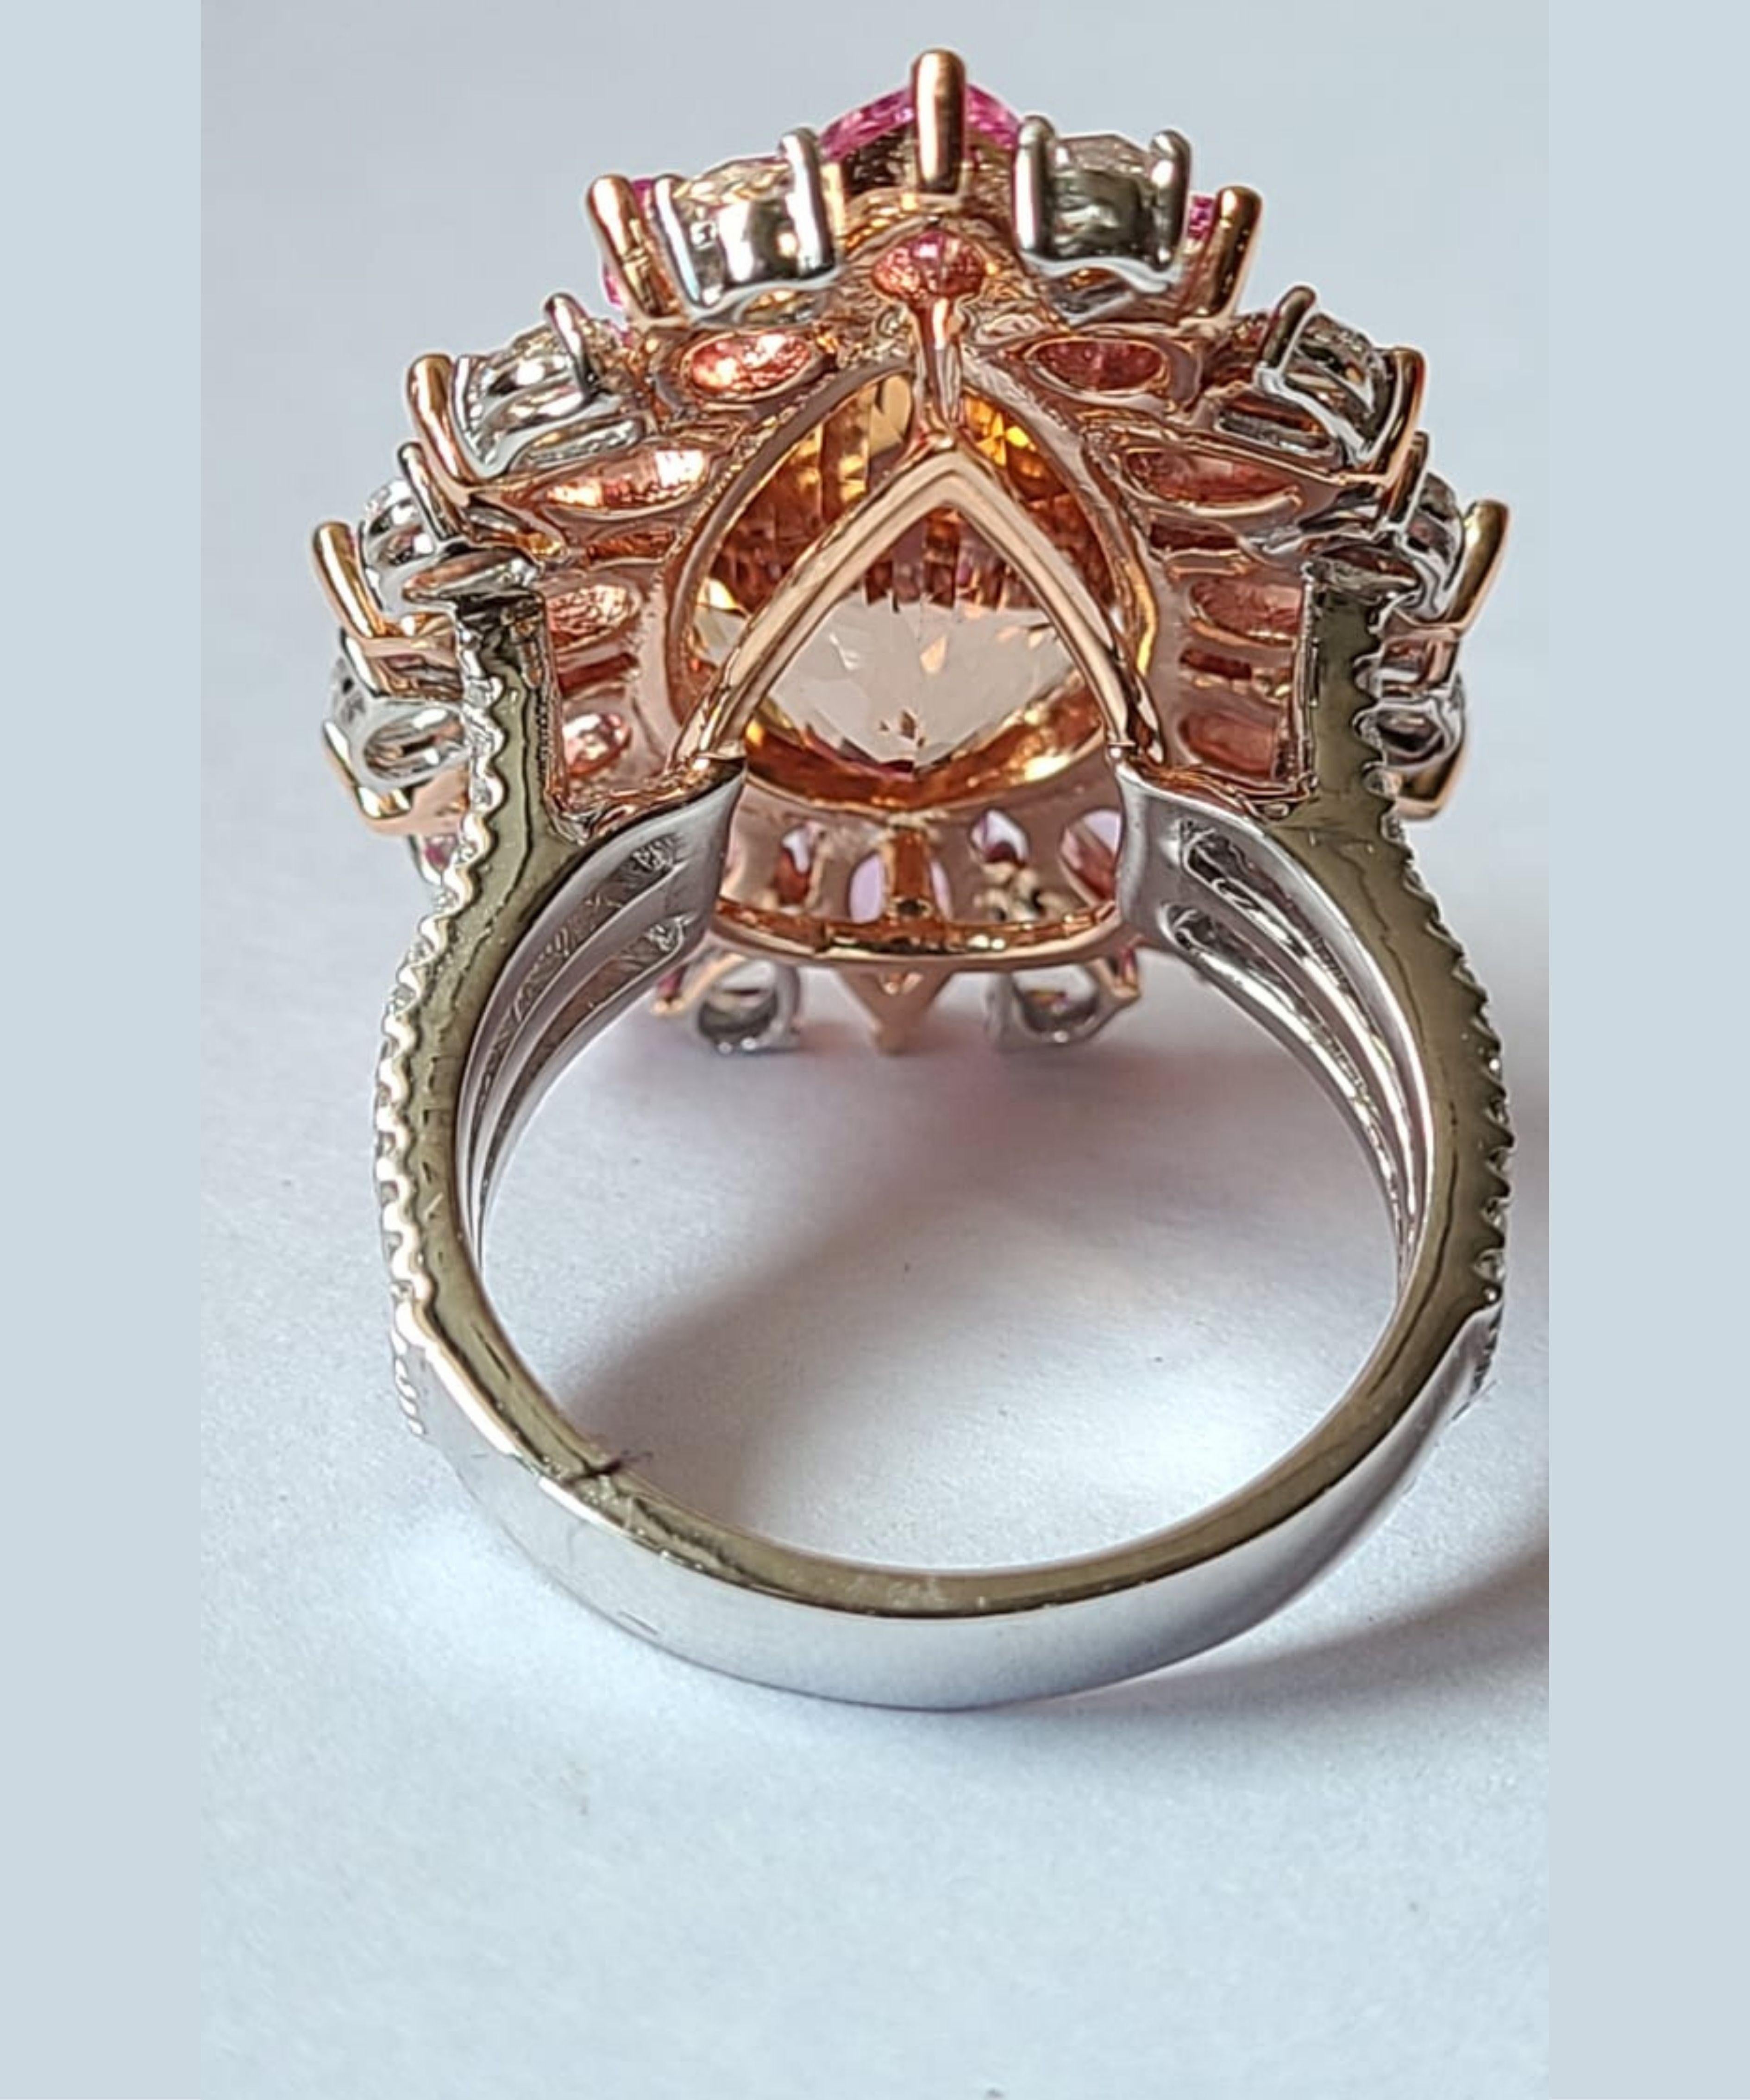 Pear Cut Set in 18K Rose Gold, natural Morganite, Pink Sapphires & Diamonds Cocktail Ring